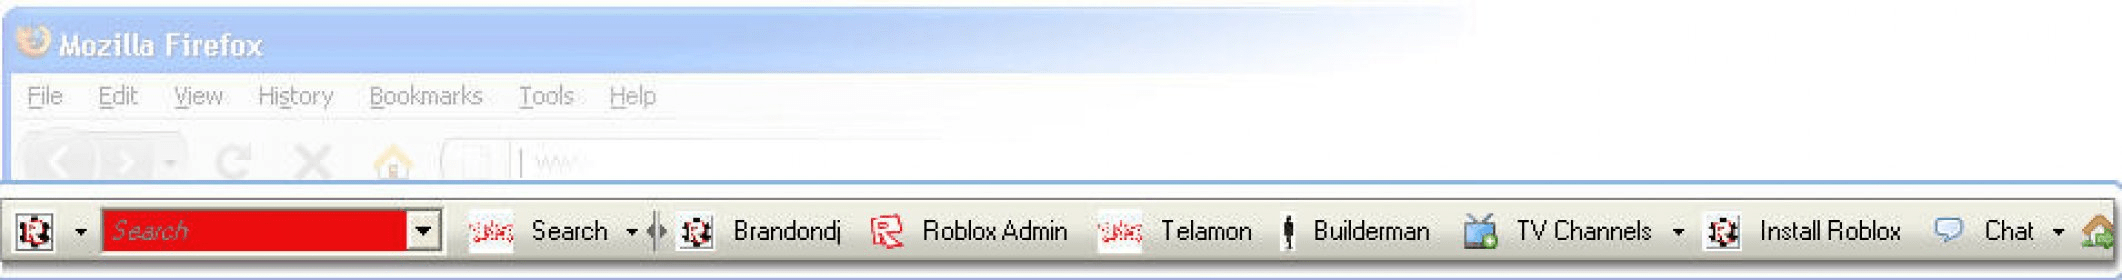 Roblox Admin Downloader